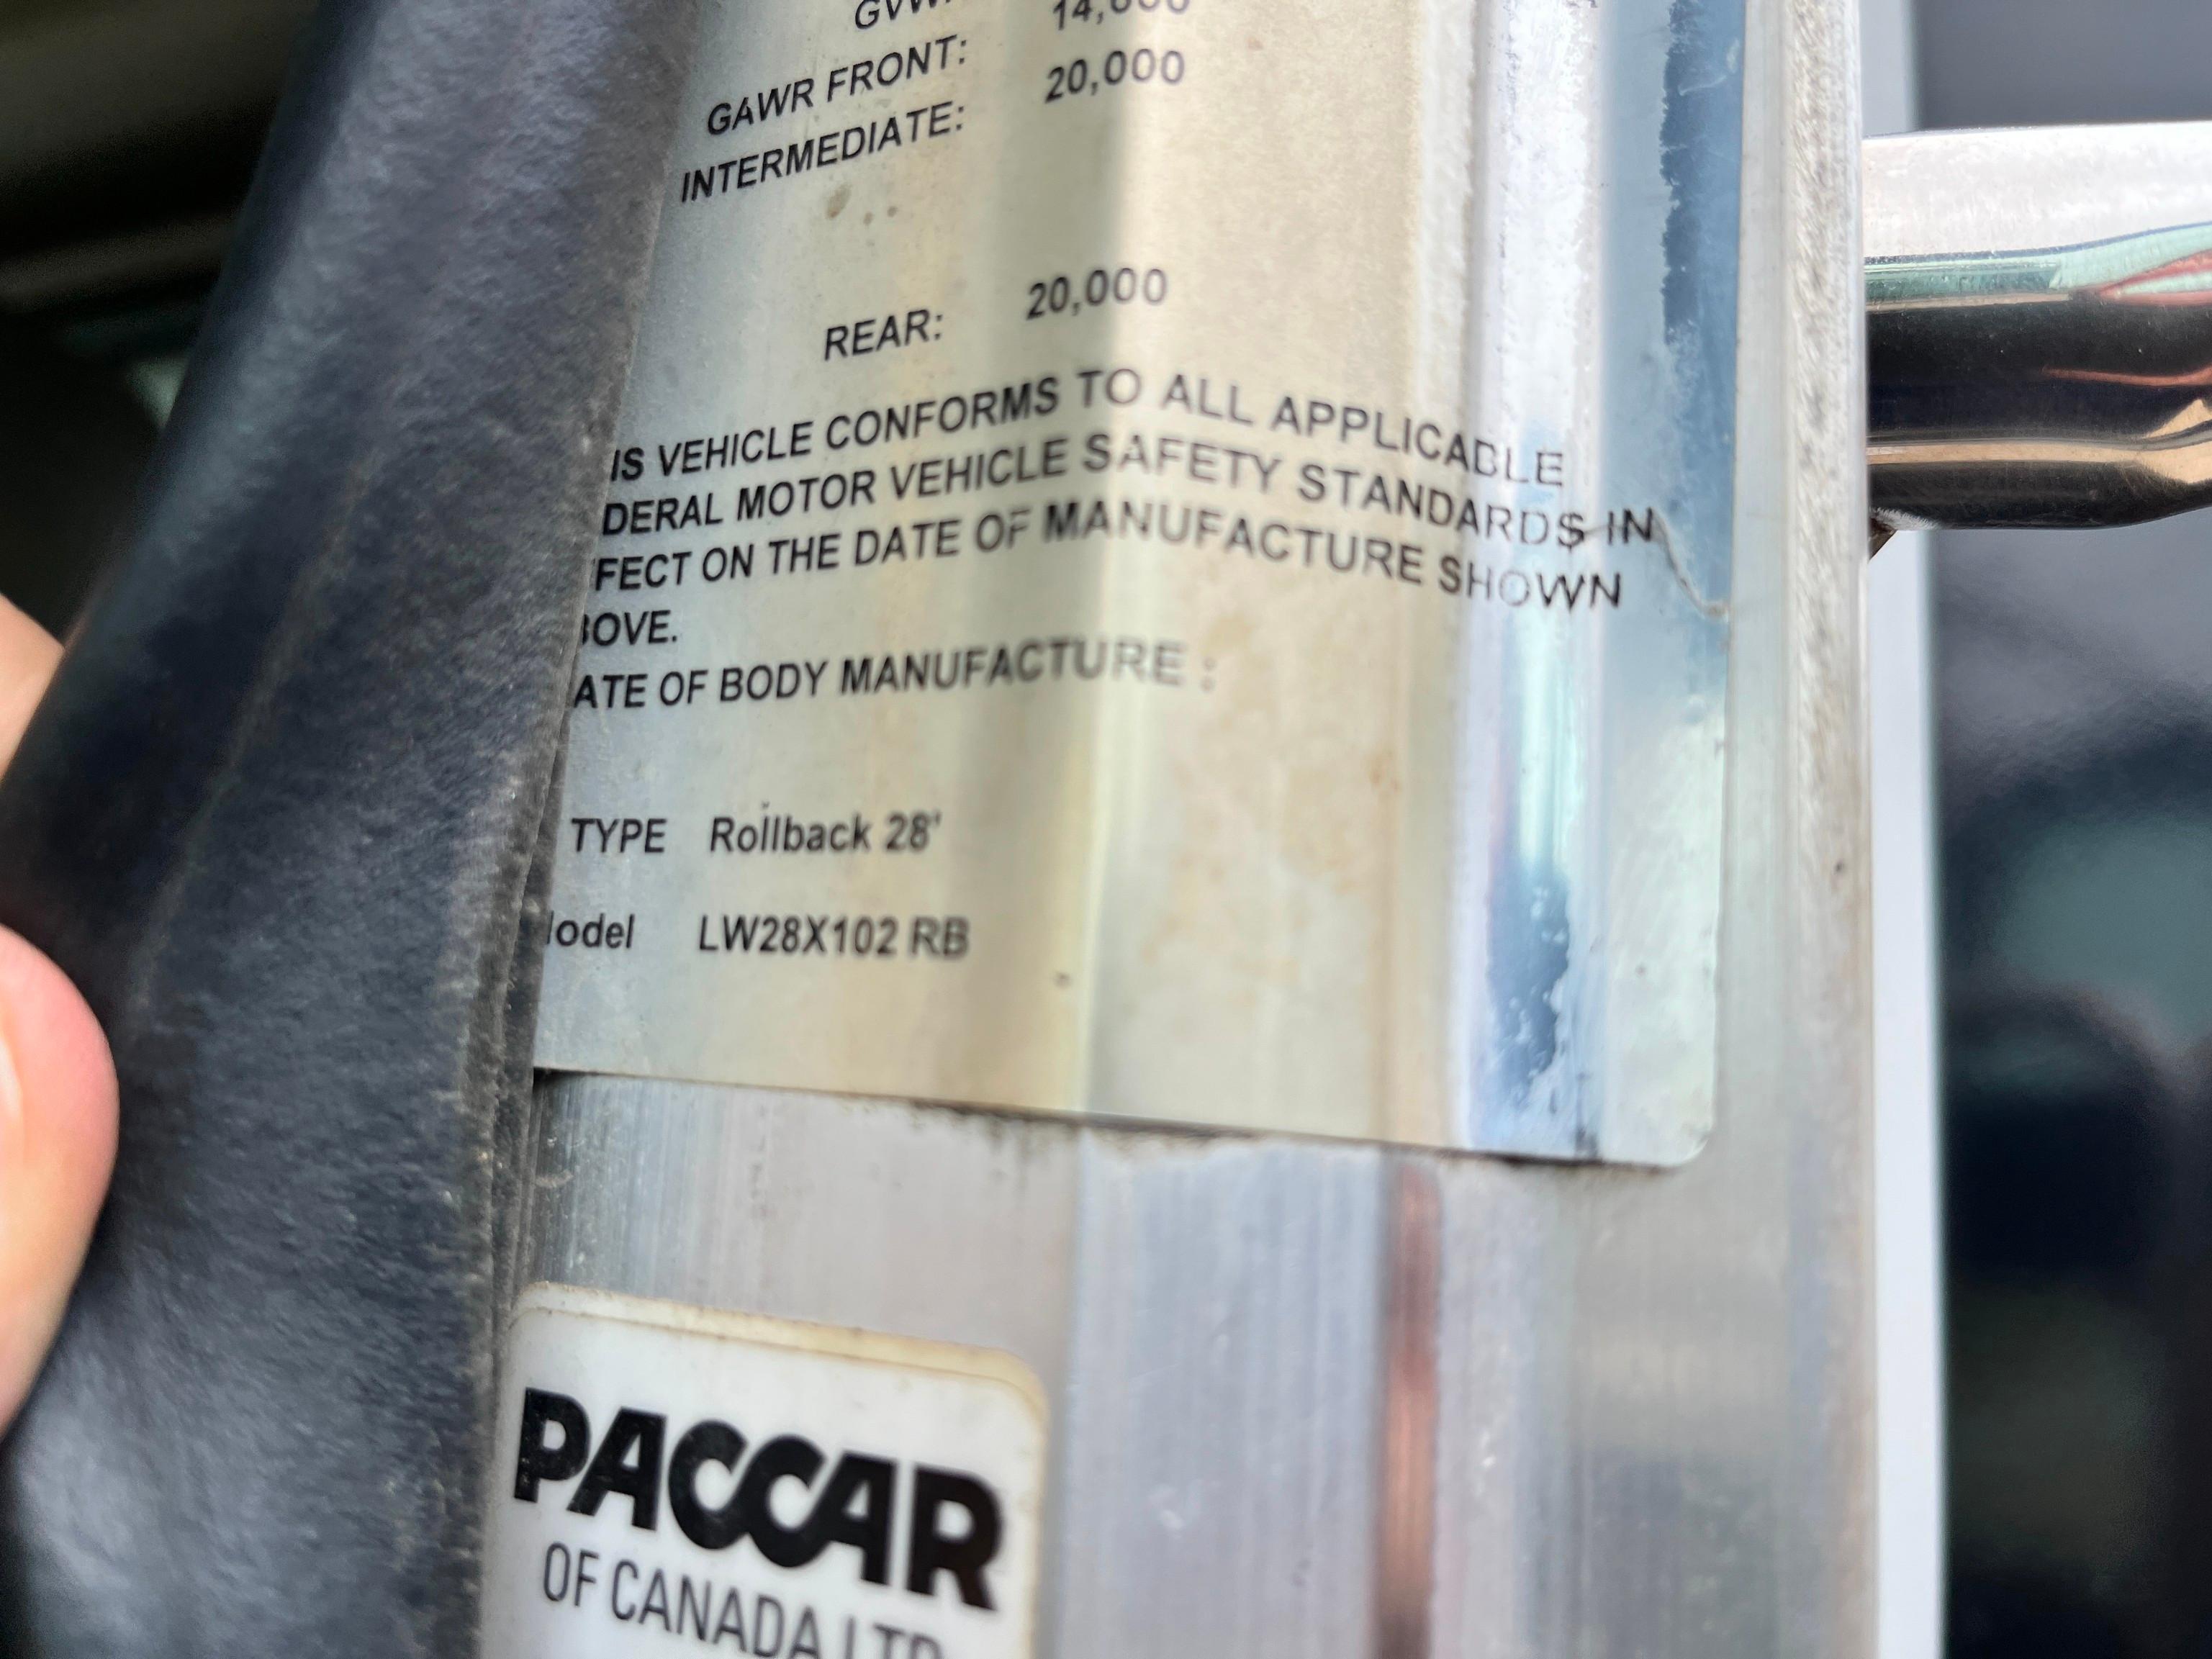 2015 PETERBILT PB348 ROLLBACK TRUCK VN:3NP3LJ9XXFM255656 powered by Paccar PX-9 diesel engine,